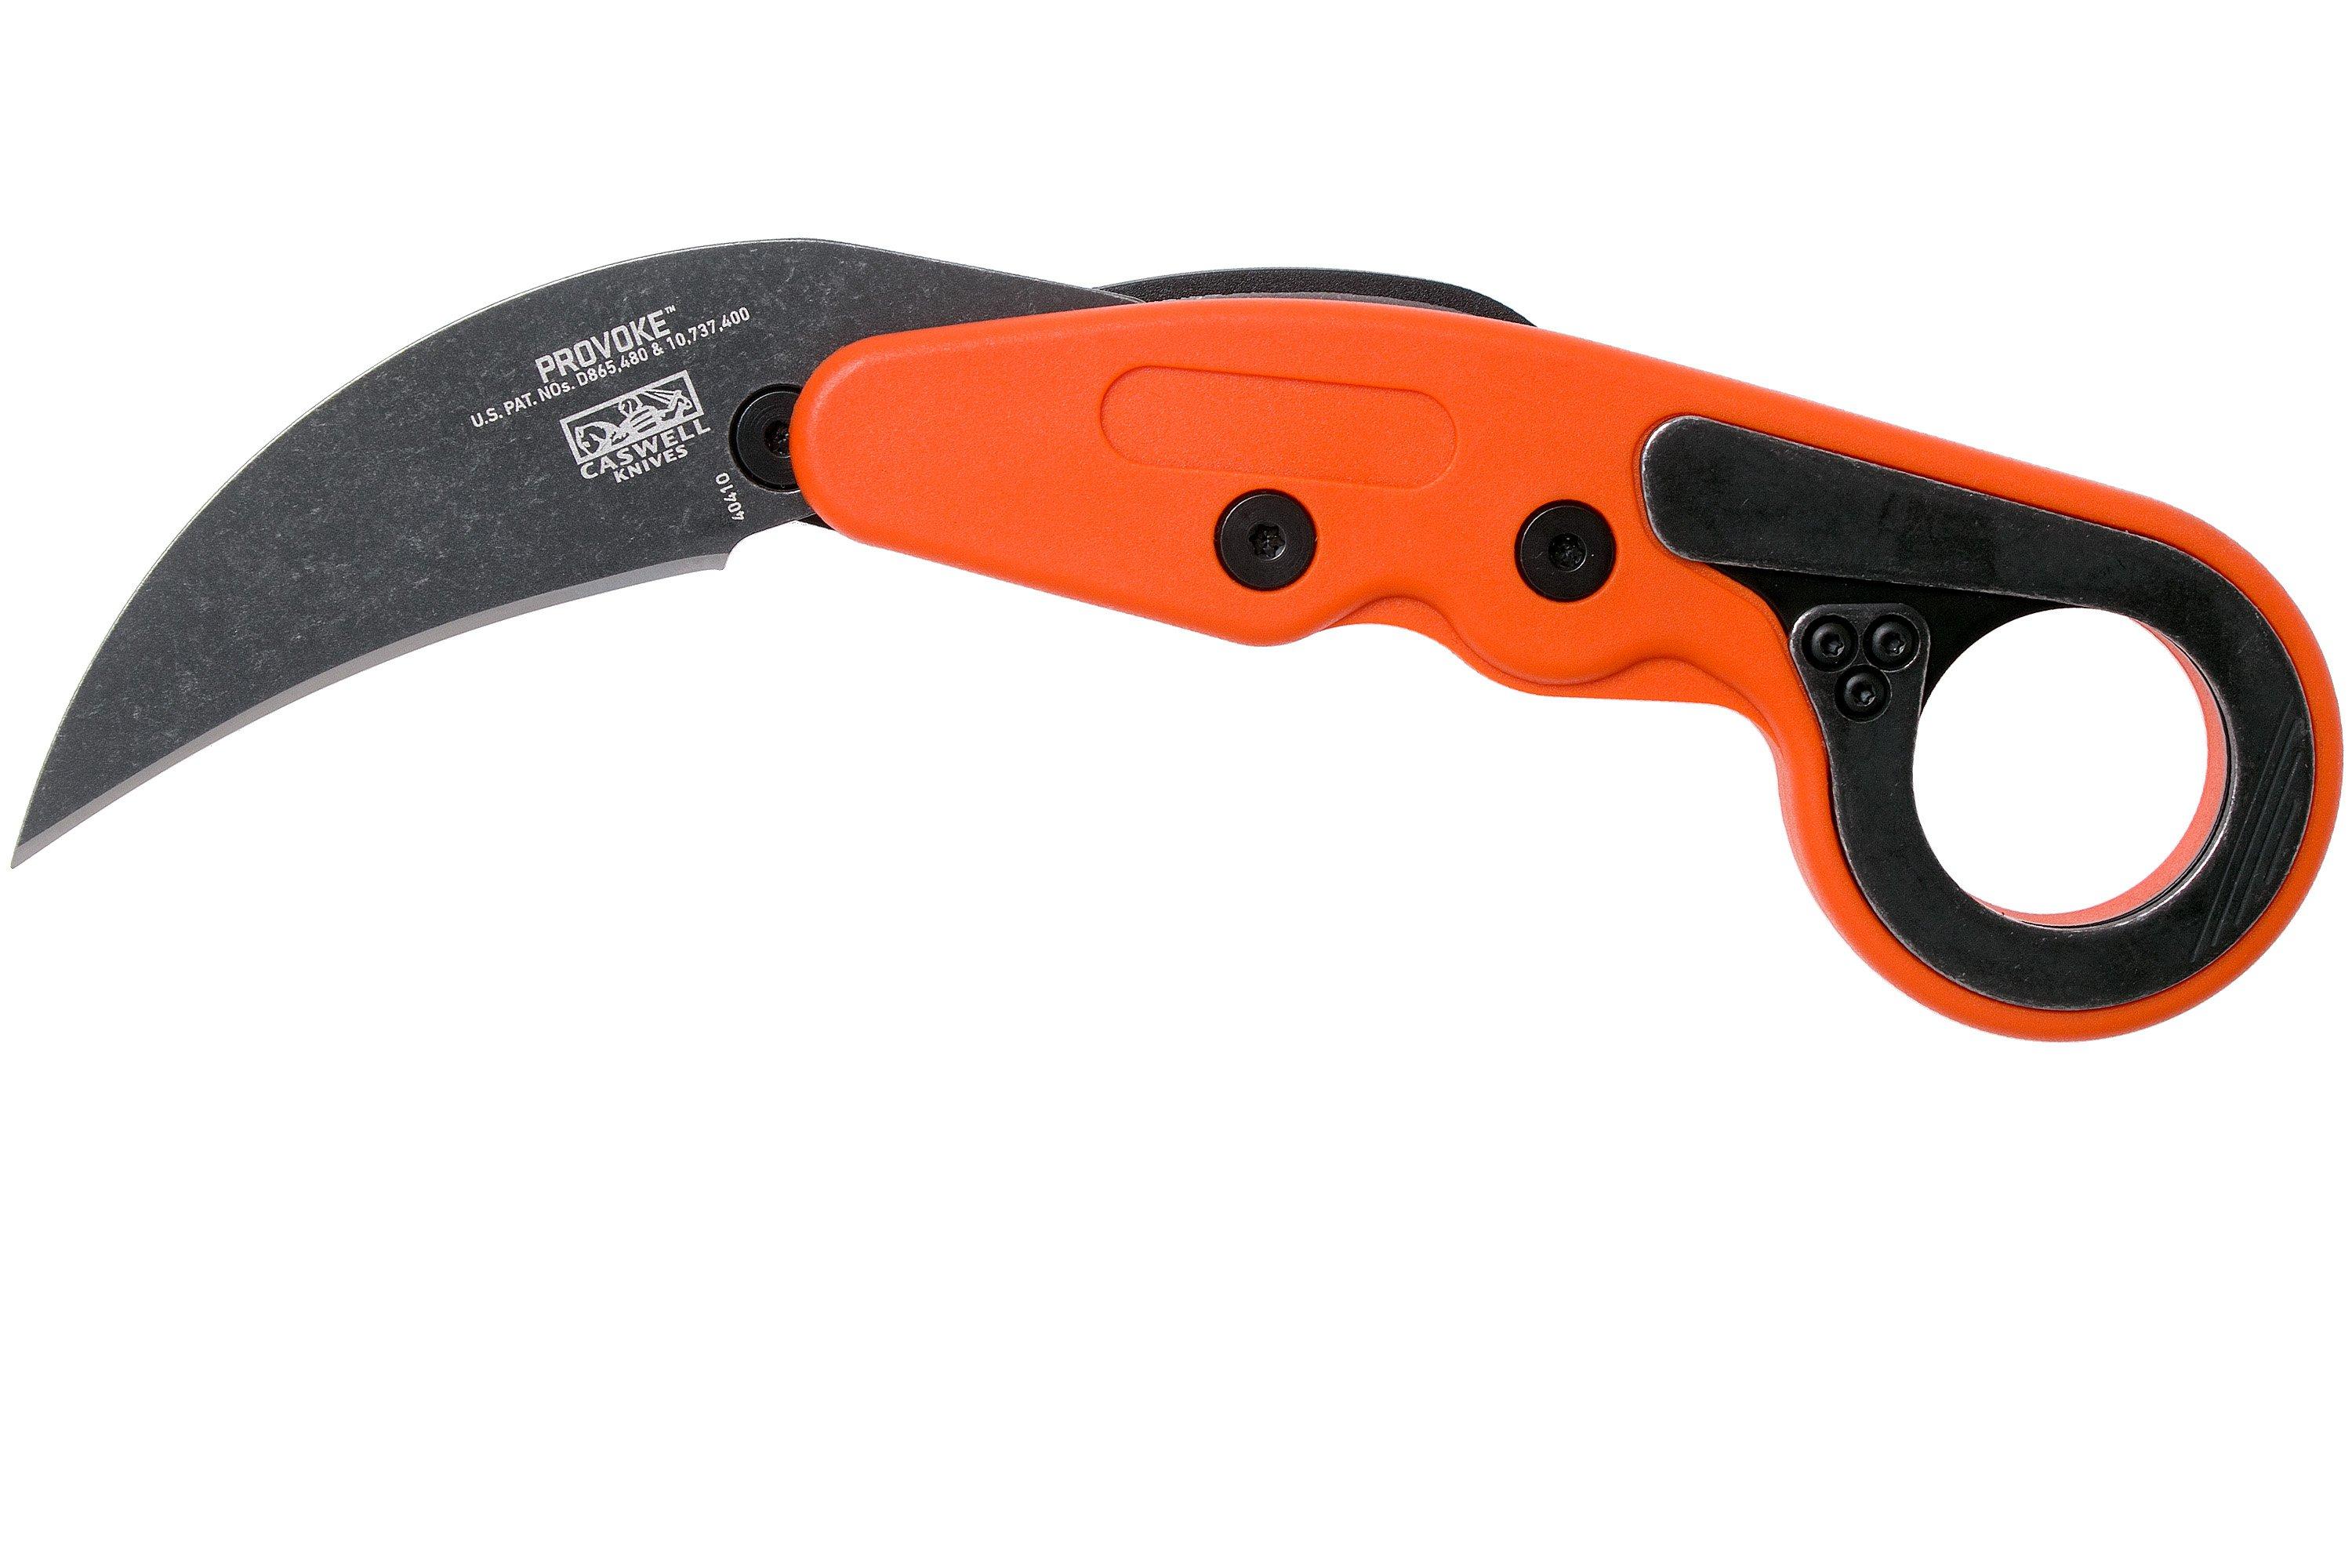 Crkt Provoke Orange 4041o Pocket Knife Joe Caswell Design Advantageously Shopping At